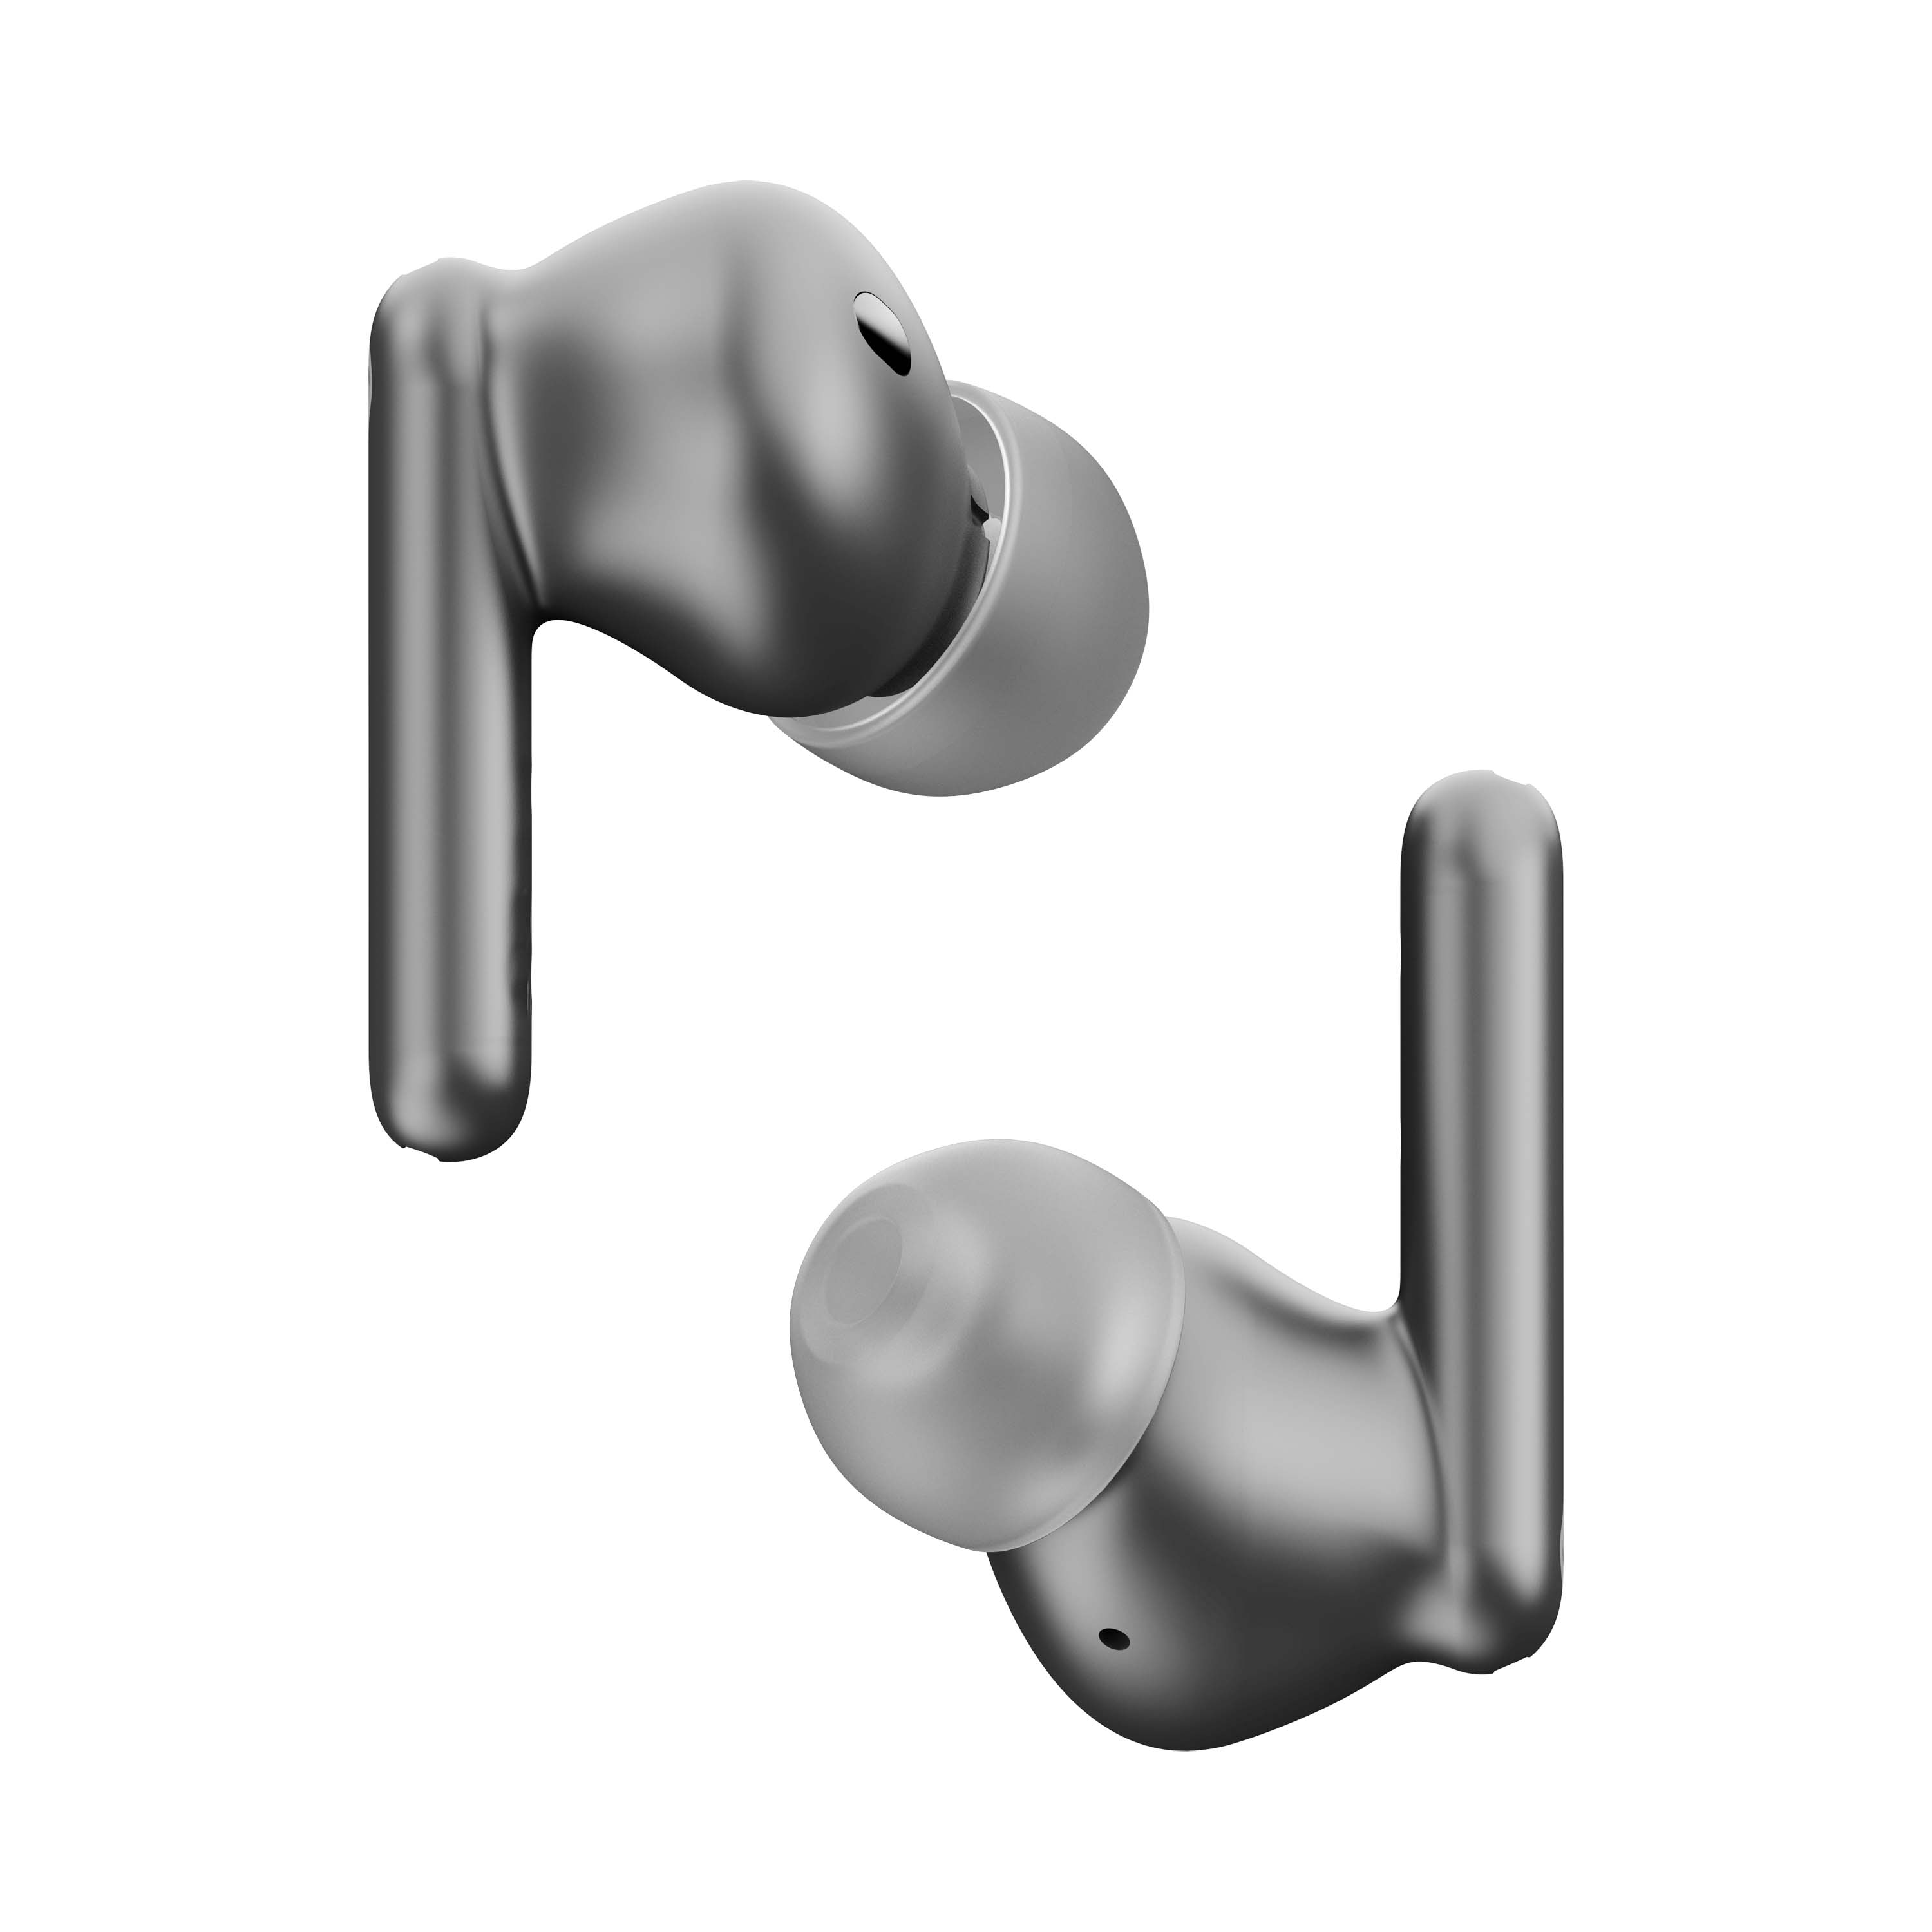 URBANISTA London, In-ear In-Ear Headphones - Wireless Titanium